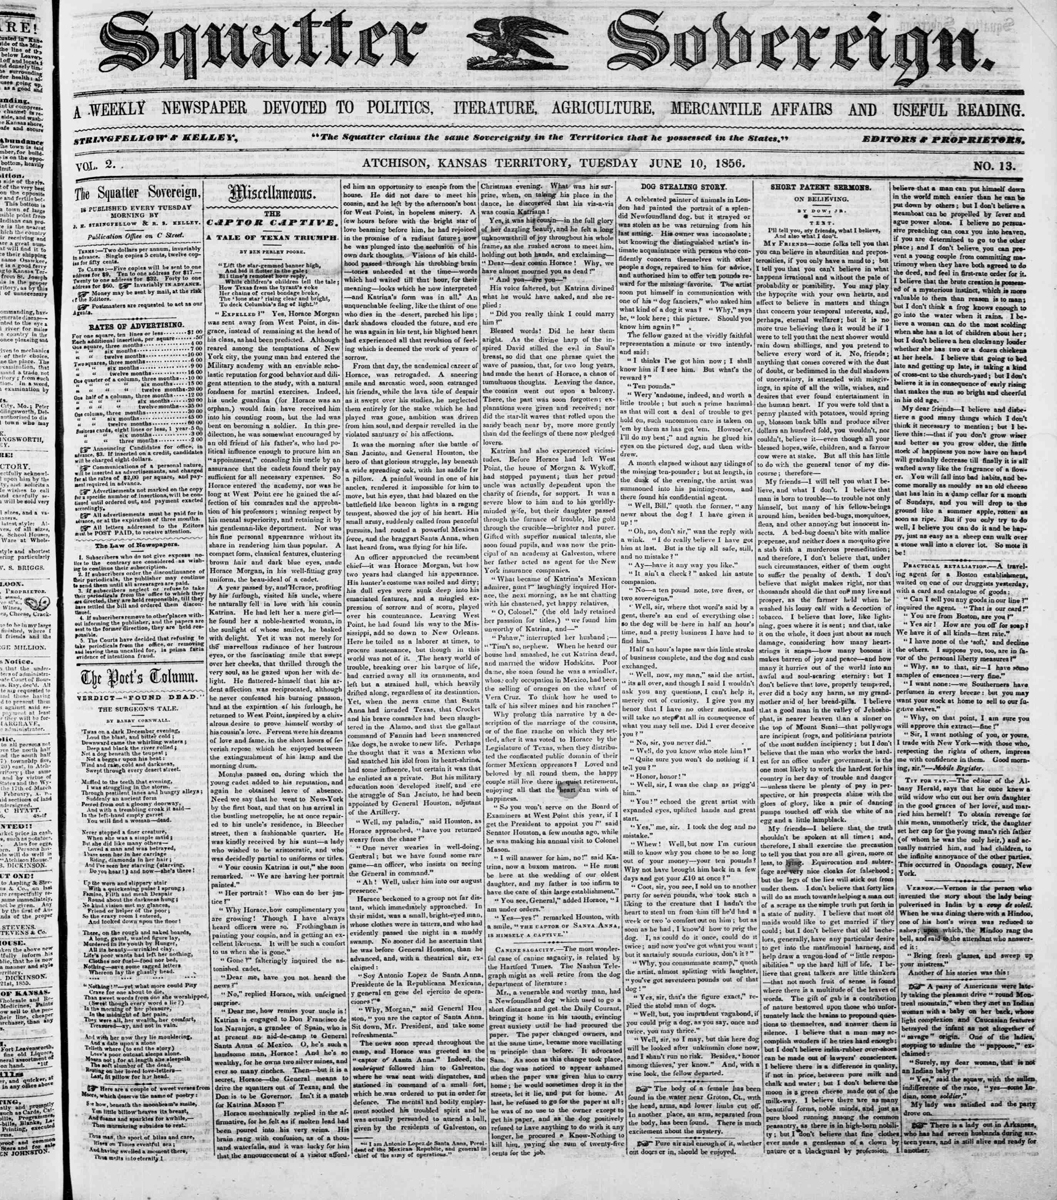 Atchison Squatter Sovereign, June 10, 1856